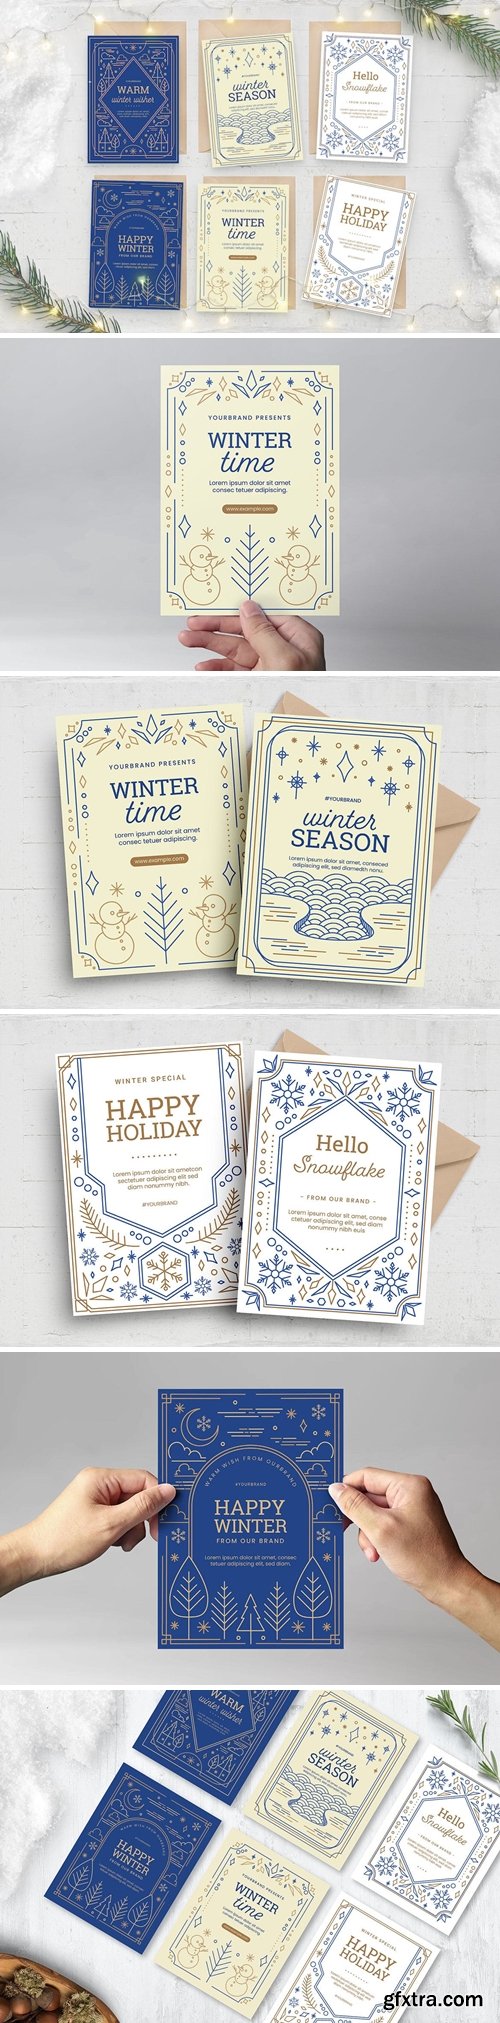 Ornate Winter Card / Invitation Templates Set B2ARGNR